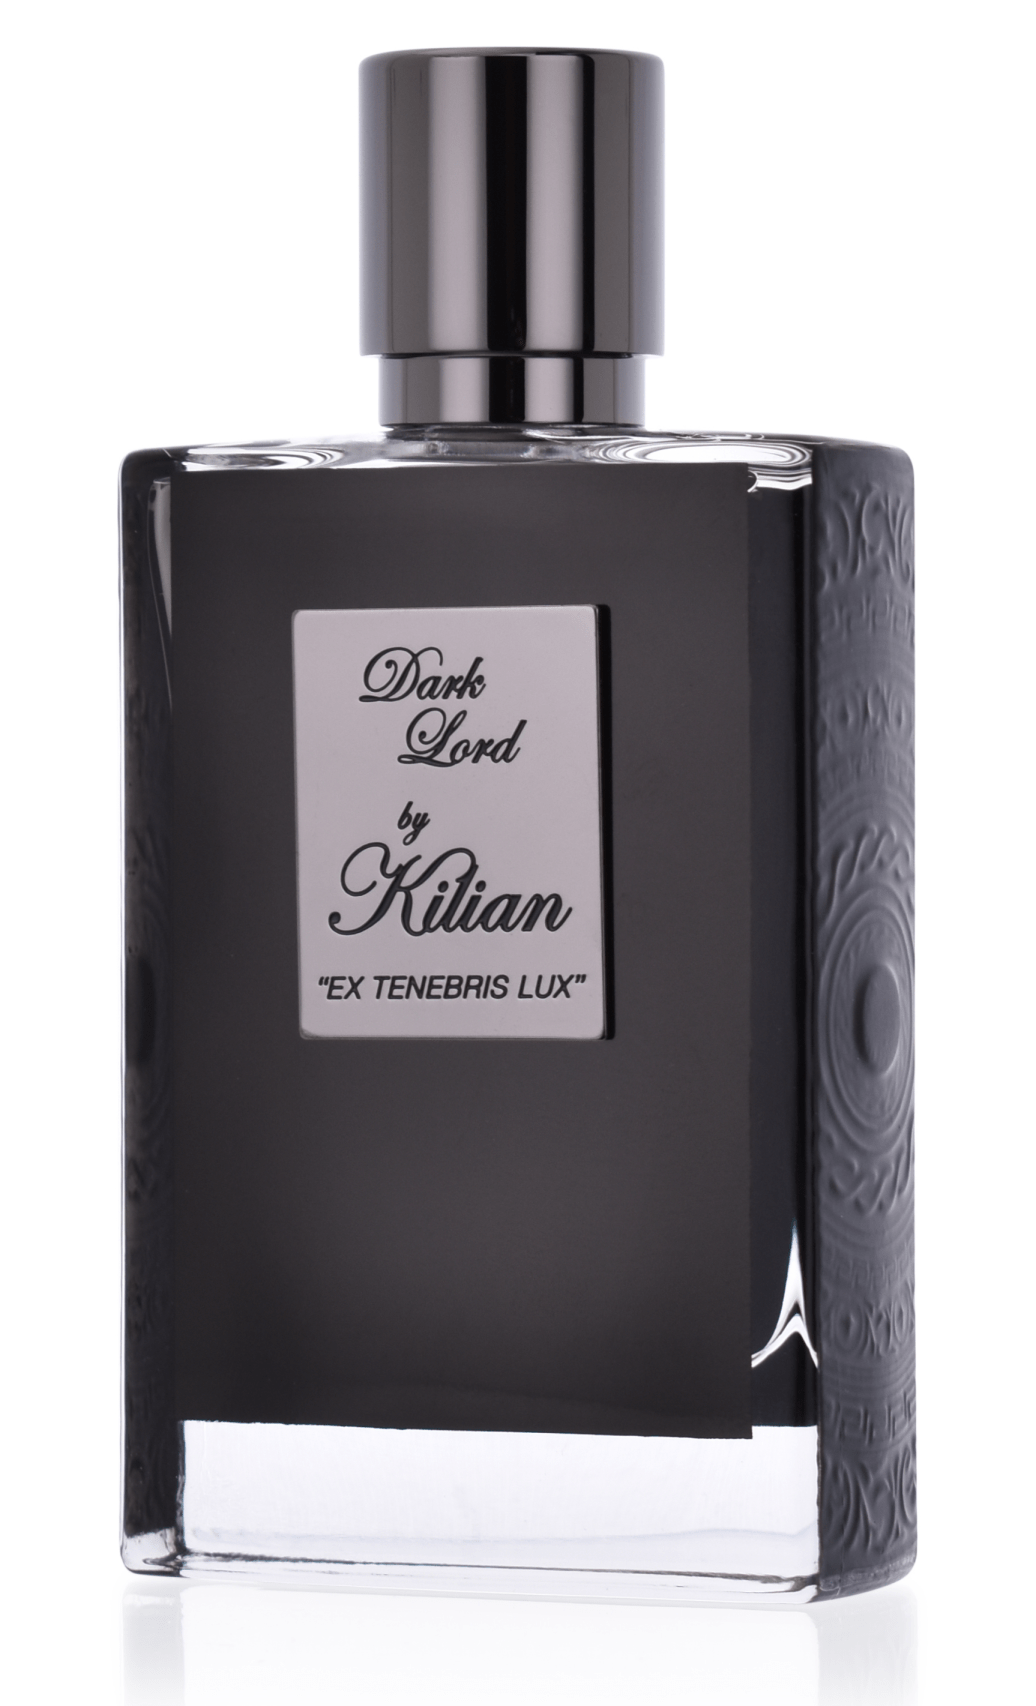 Kilian Dark Lord Ex Tenebris Lux 5 ml Eau de Parfum (Abfüllung)